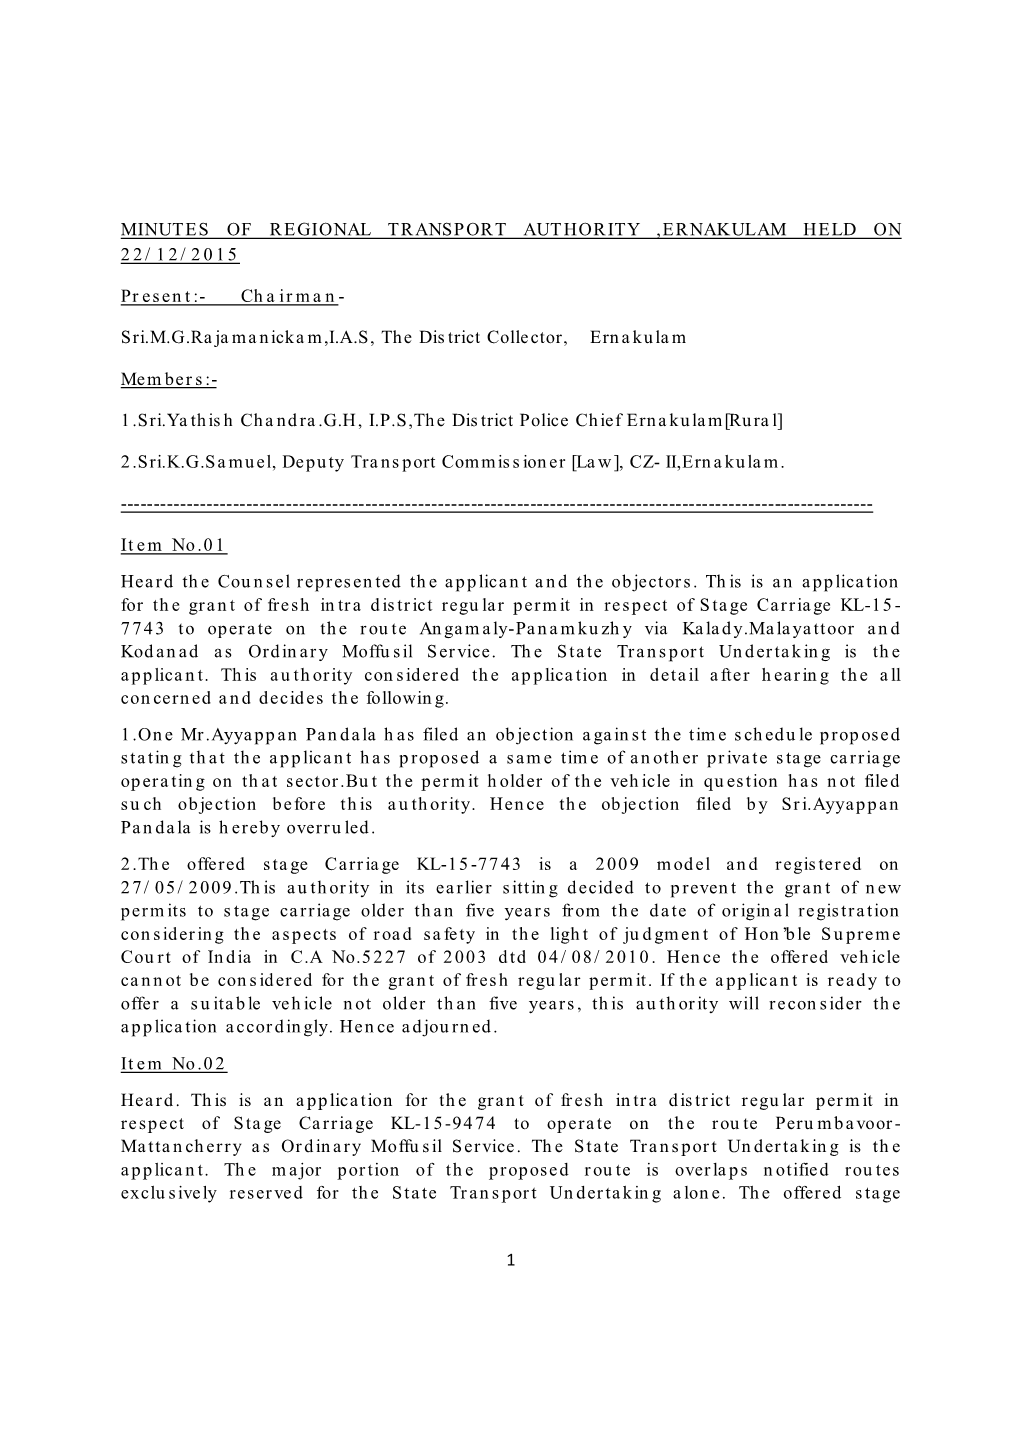 Minutes of Regional Transport Authority ,Ernakulam Held on 22/12/2015